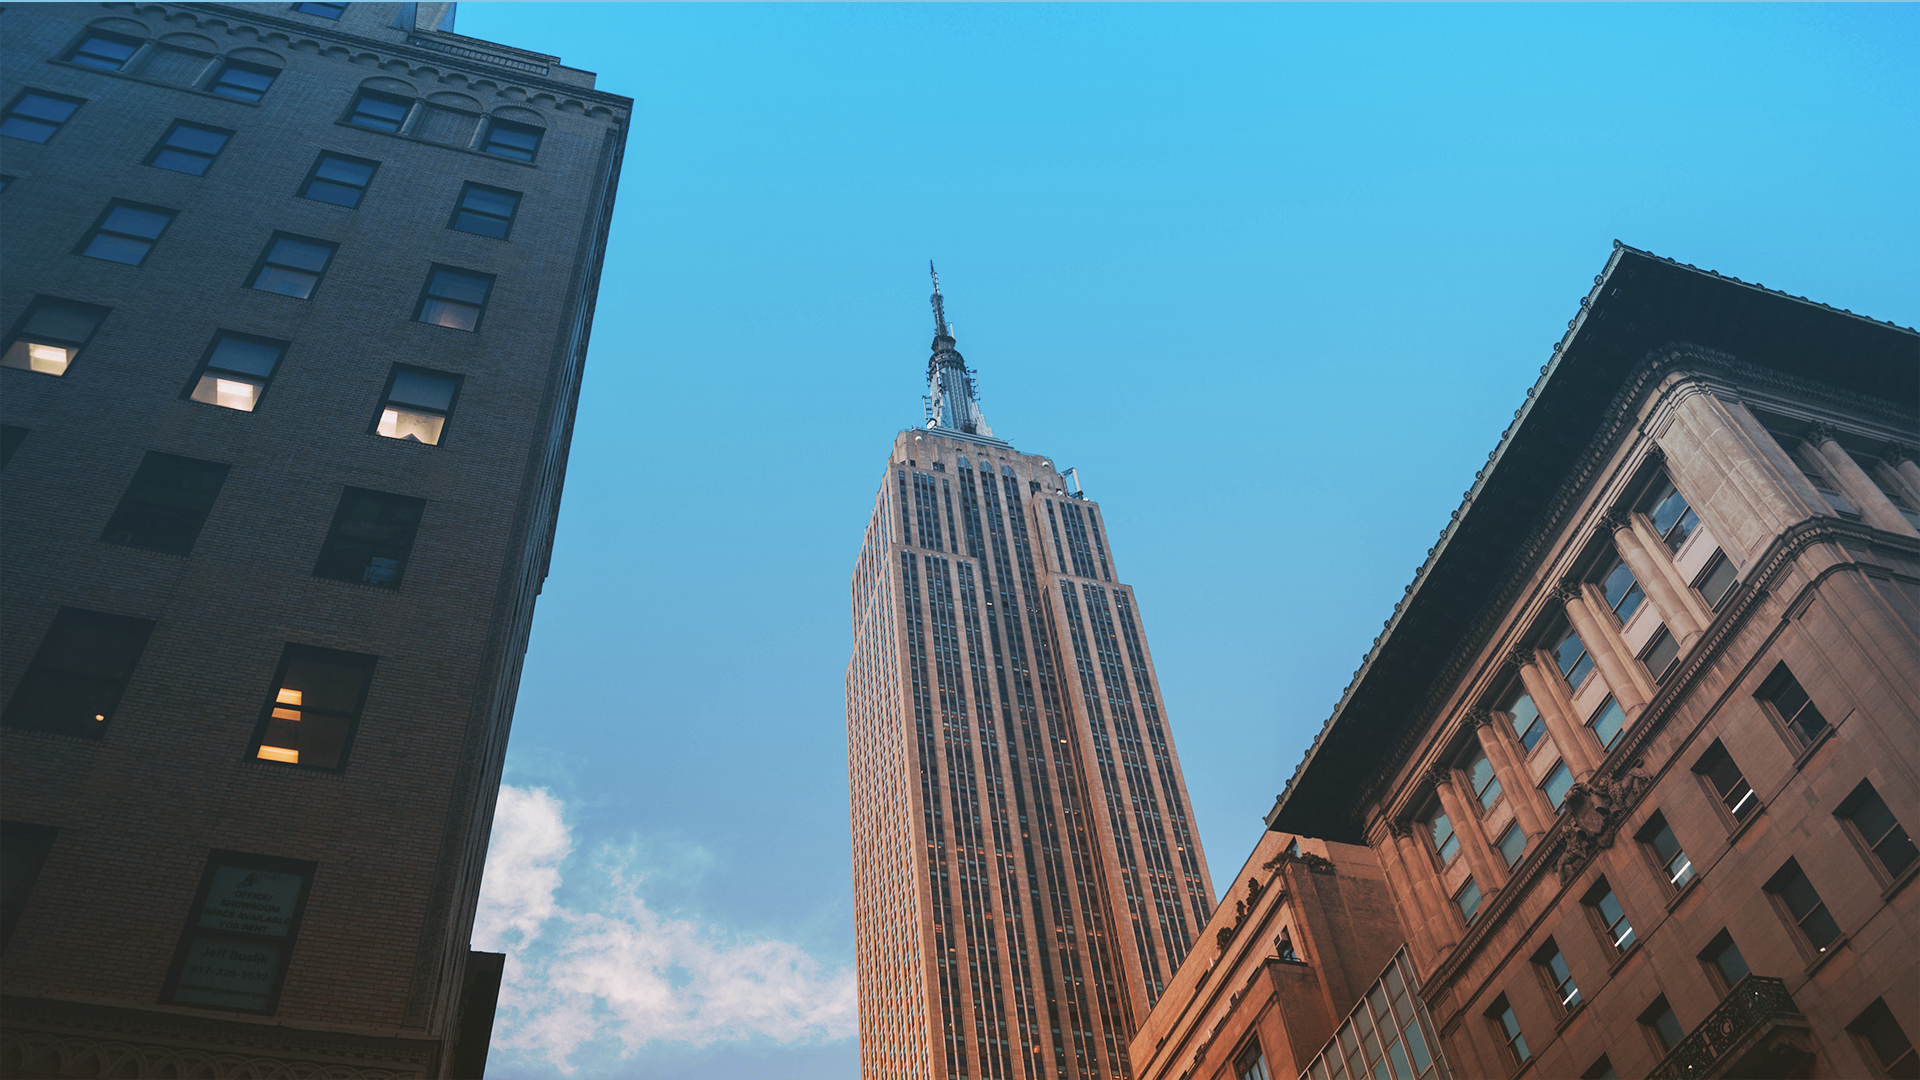 Empire State Building, Skyscraper, New York City - Tower Block - HD Wallpaper 